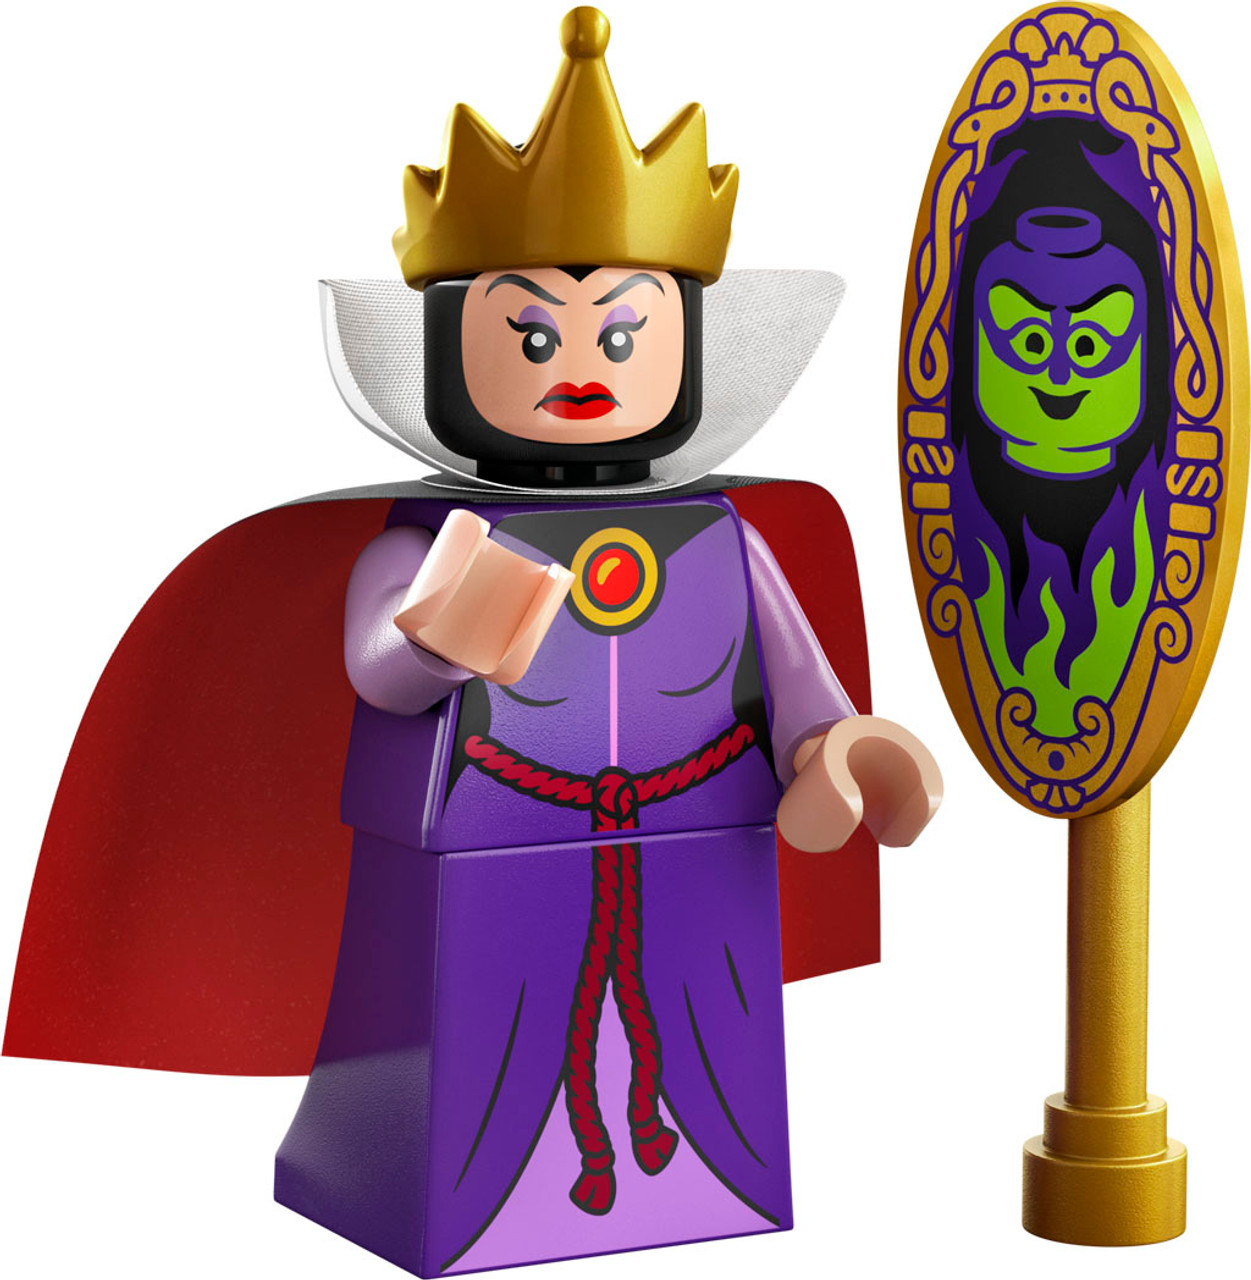 Lego Minifigures Disney 100 Series 3: The Queen Minifigure - 71038